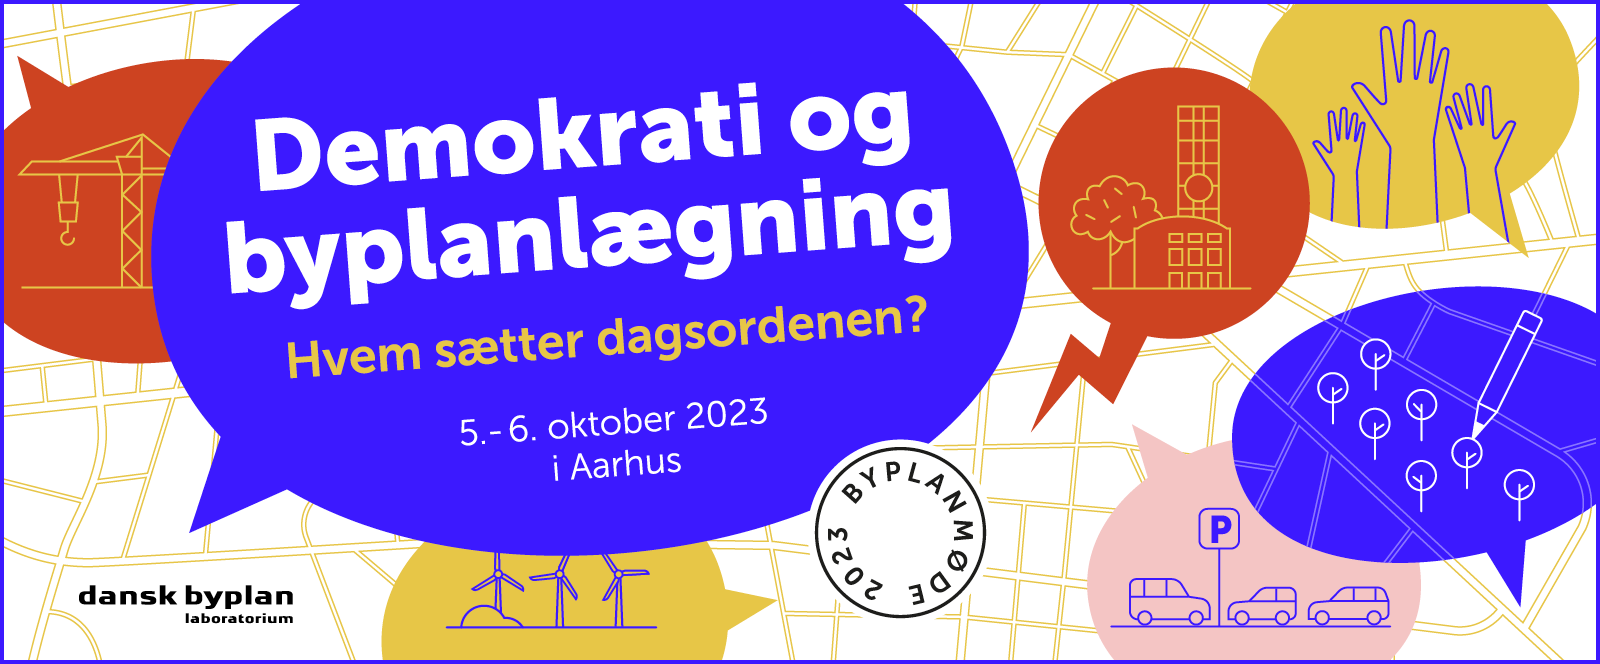 Byplanmødet 2023 5. -6. oktober i Aarhus